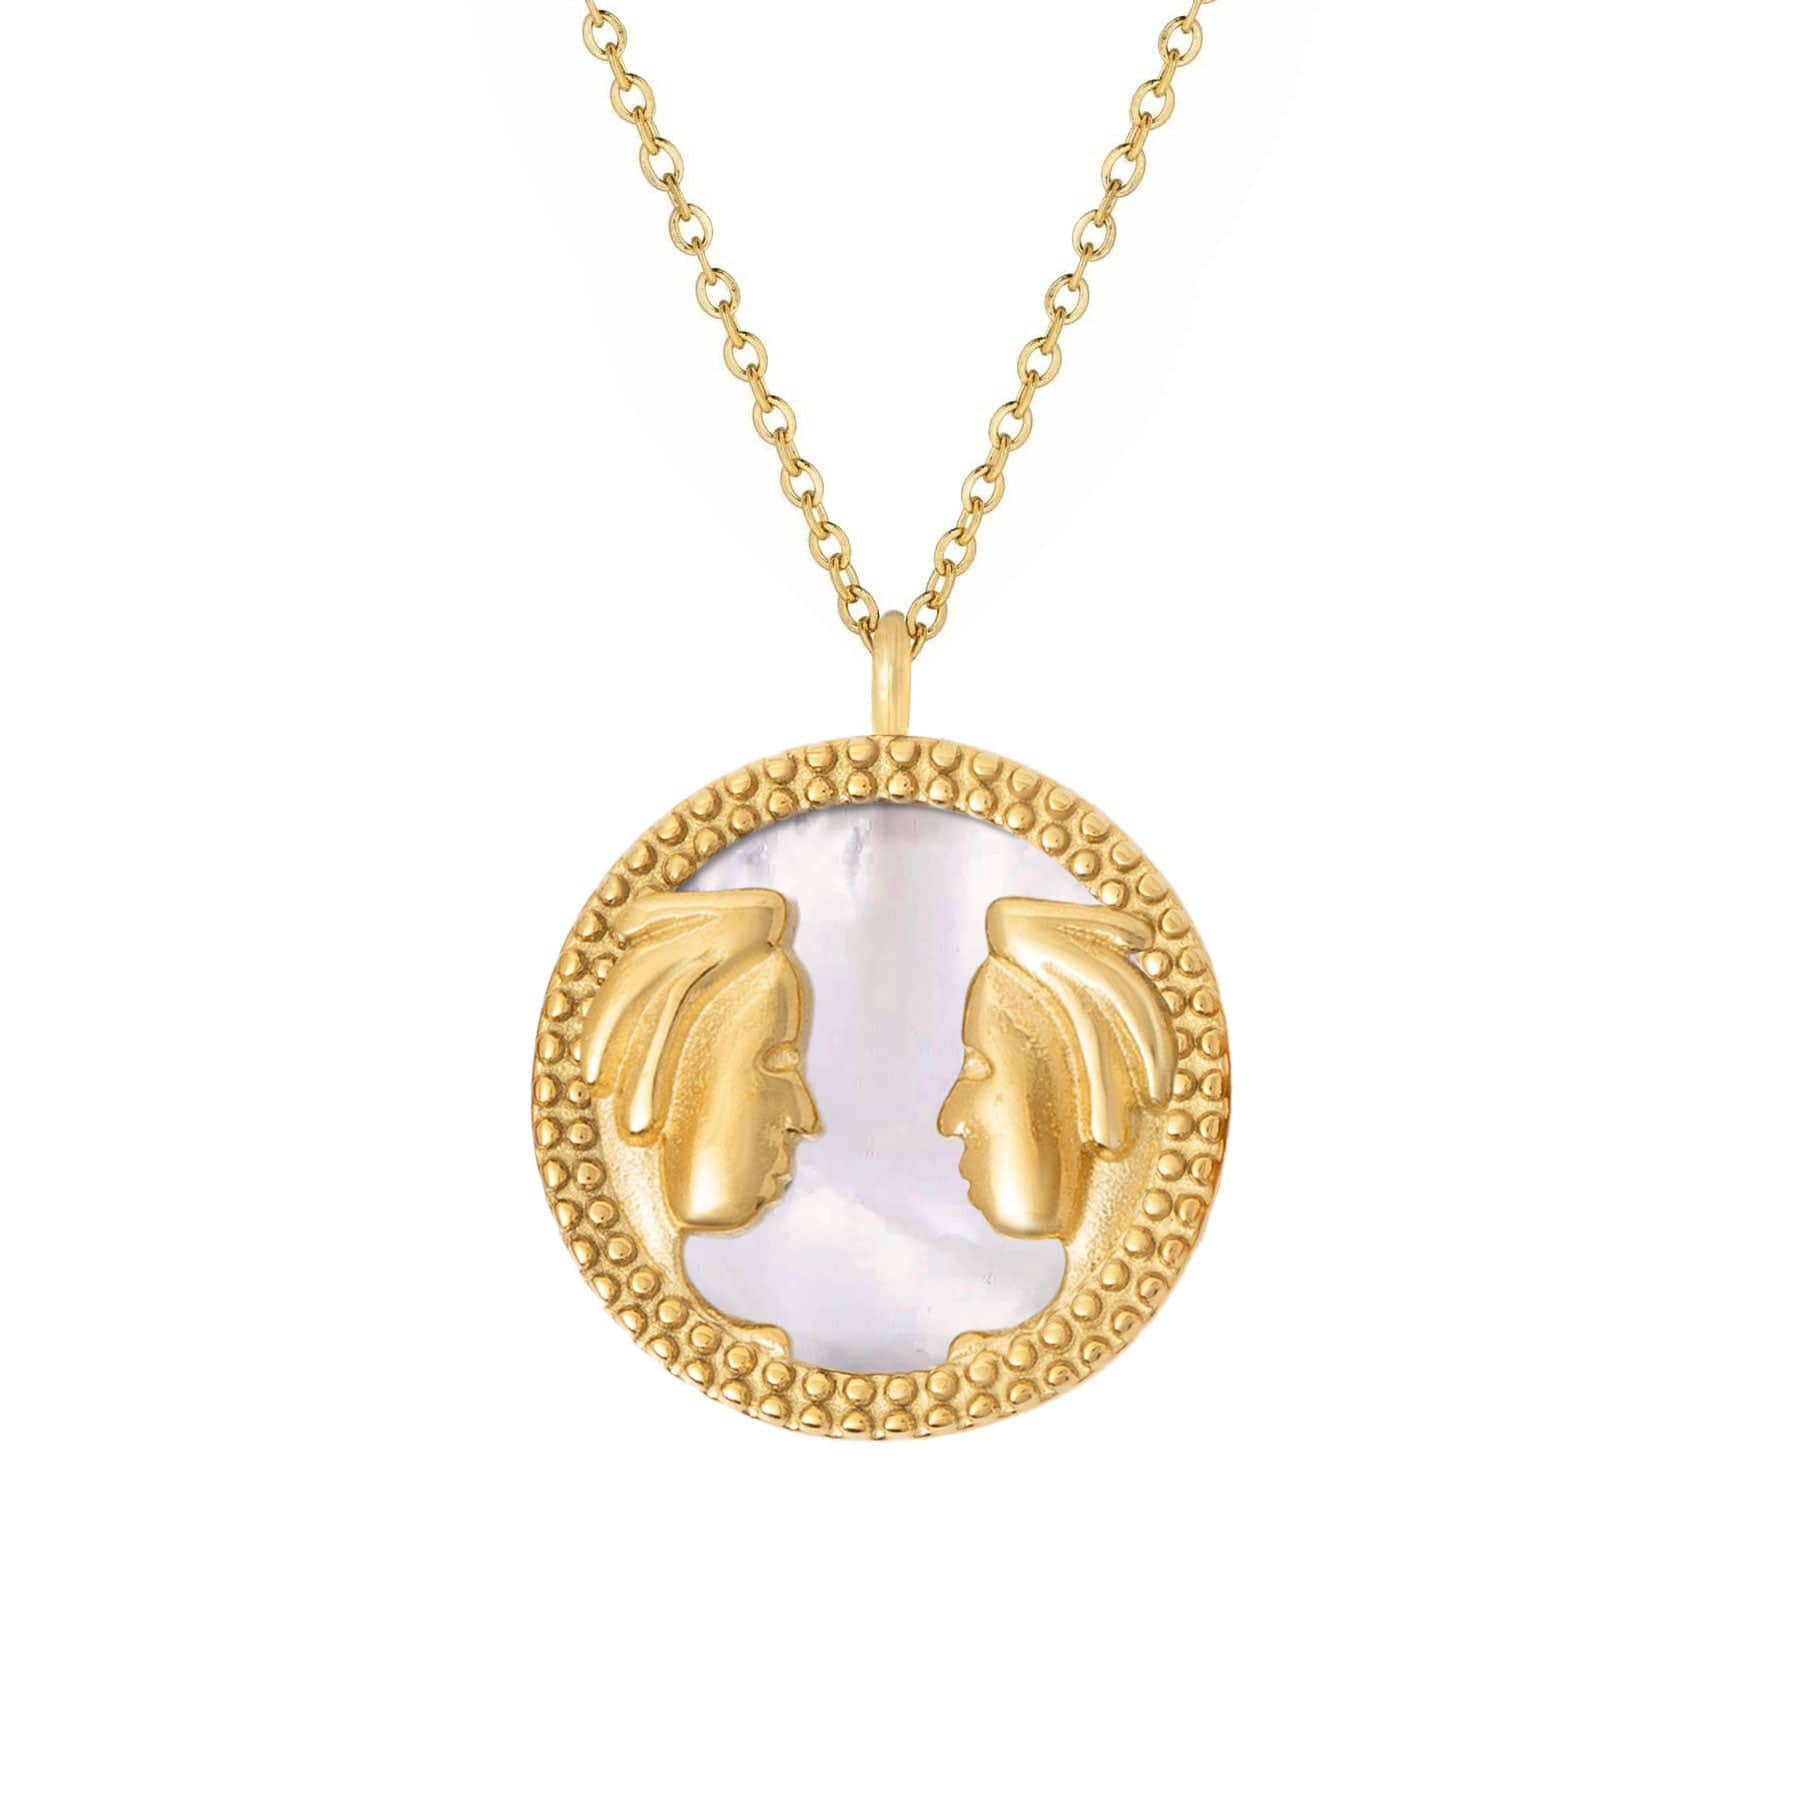 BohoMoon Stainless Steel Symbolic Zodiac Necklace Gold / Gemini